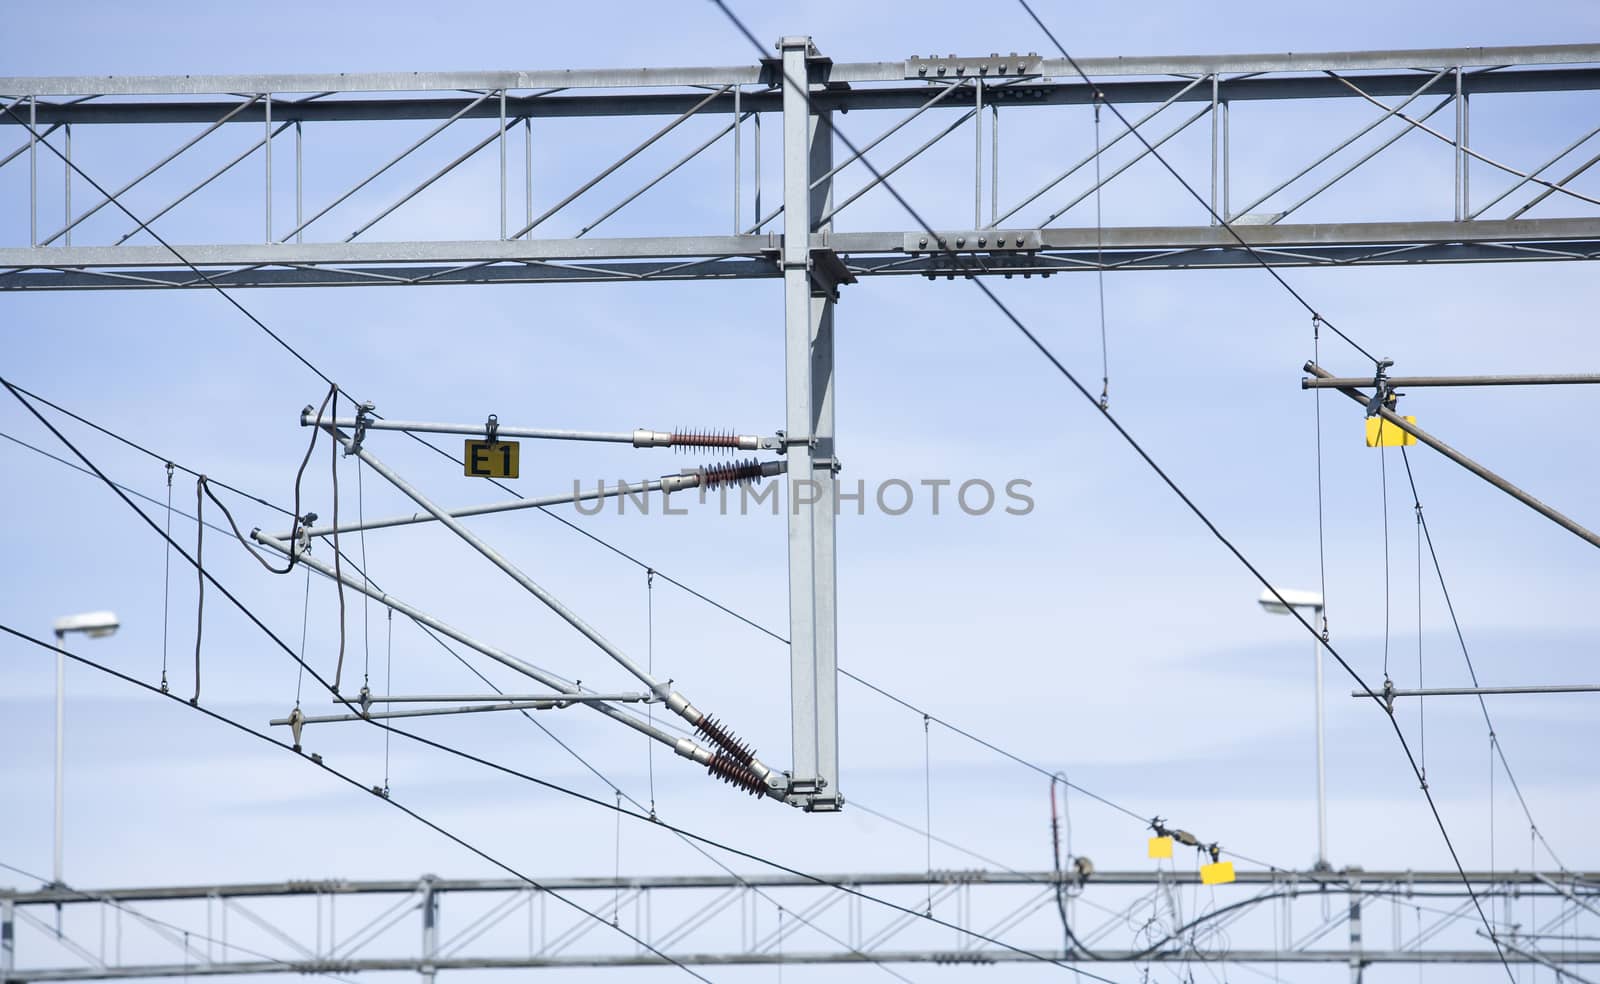 Train Power Cables towards Blue sky Full Frame